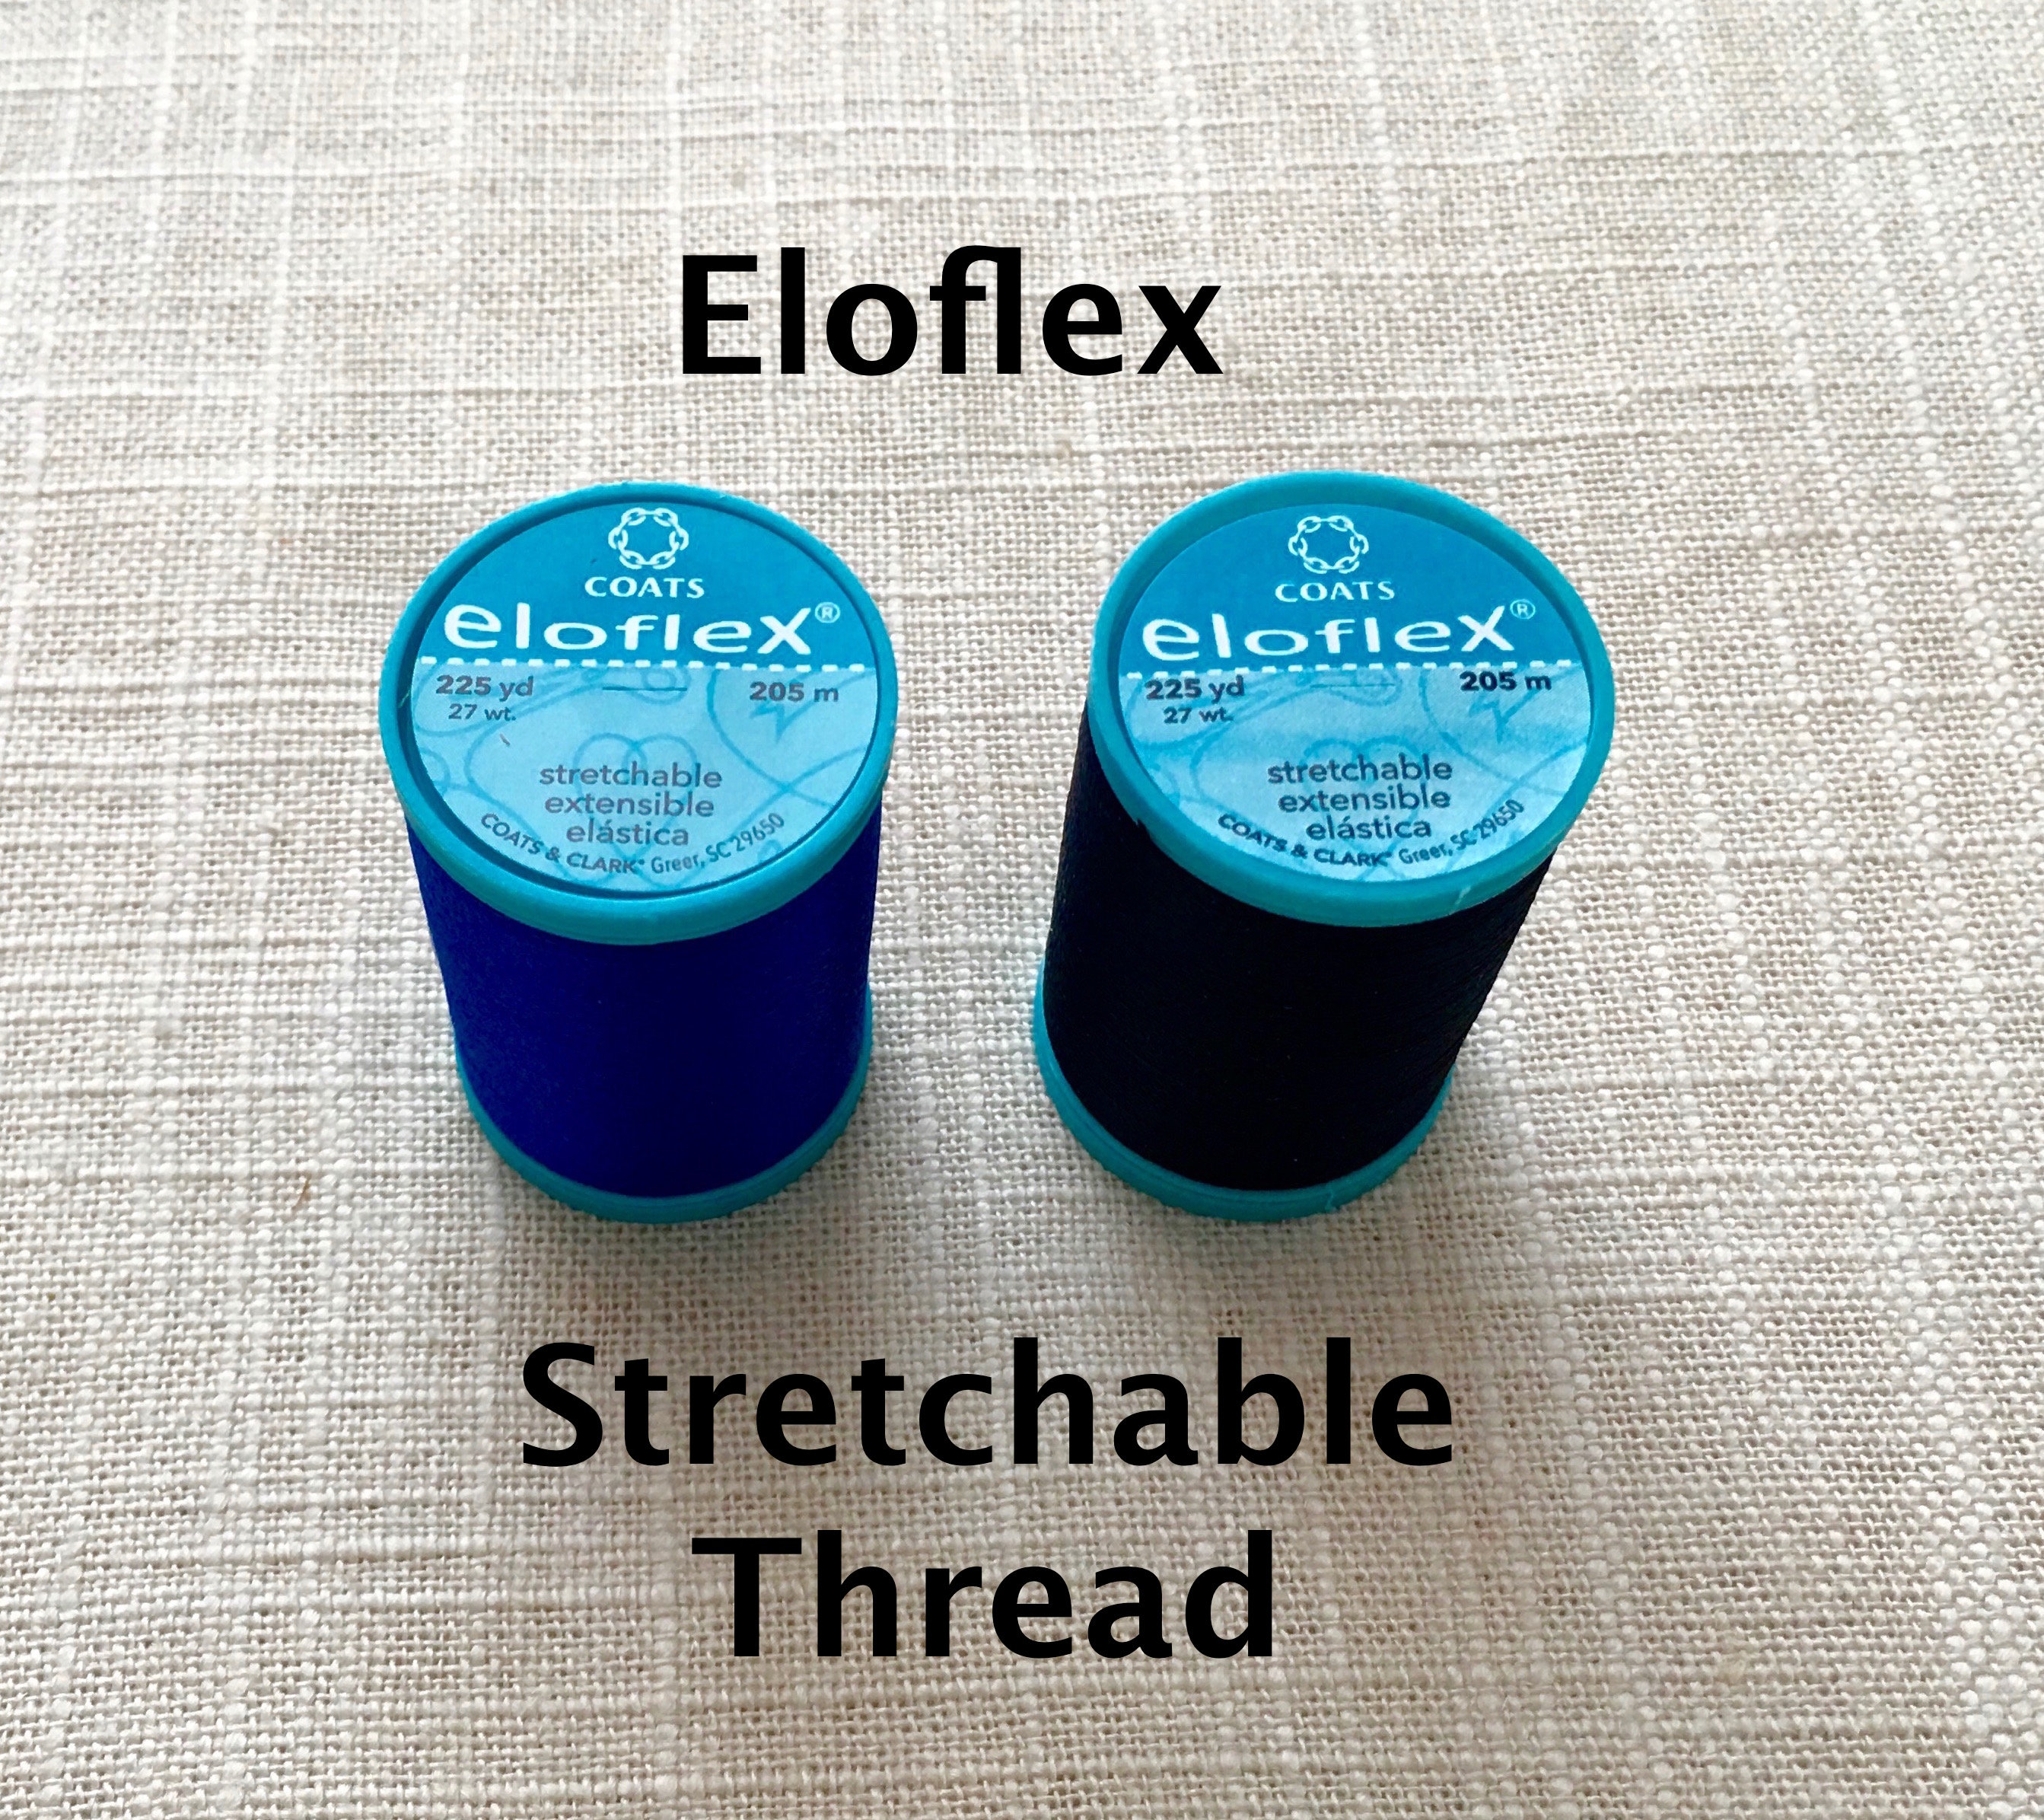 Tous les accessoires Eloflex – eloflex